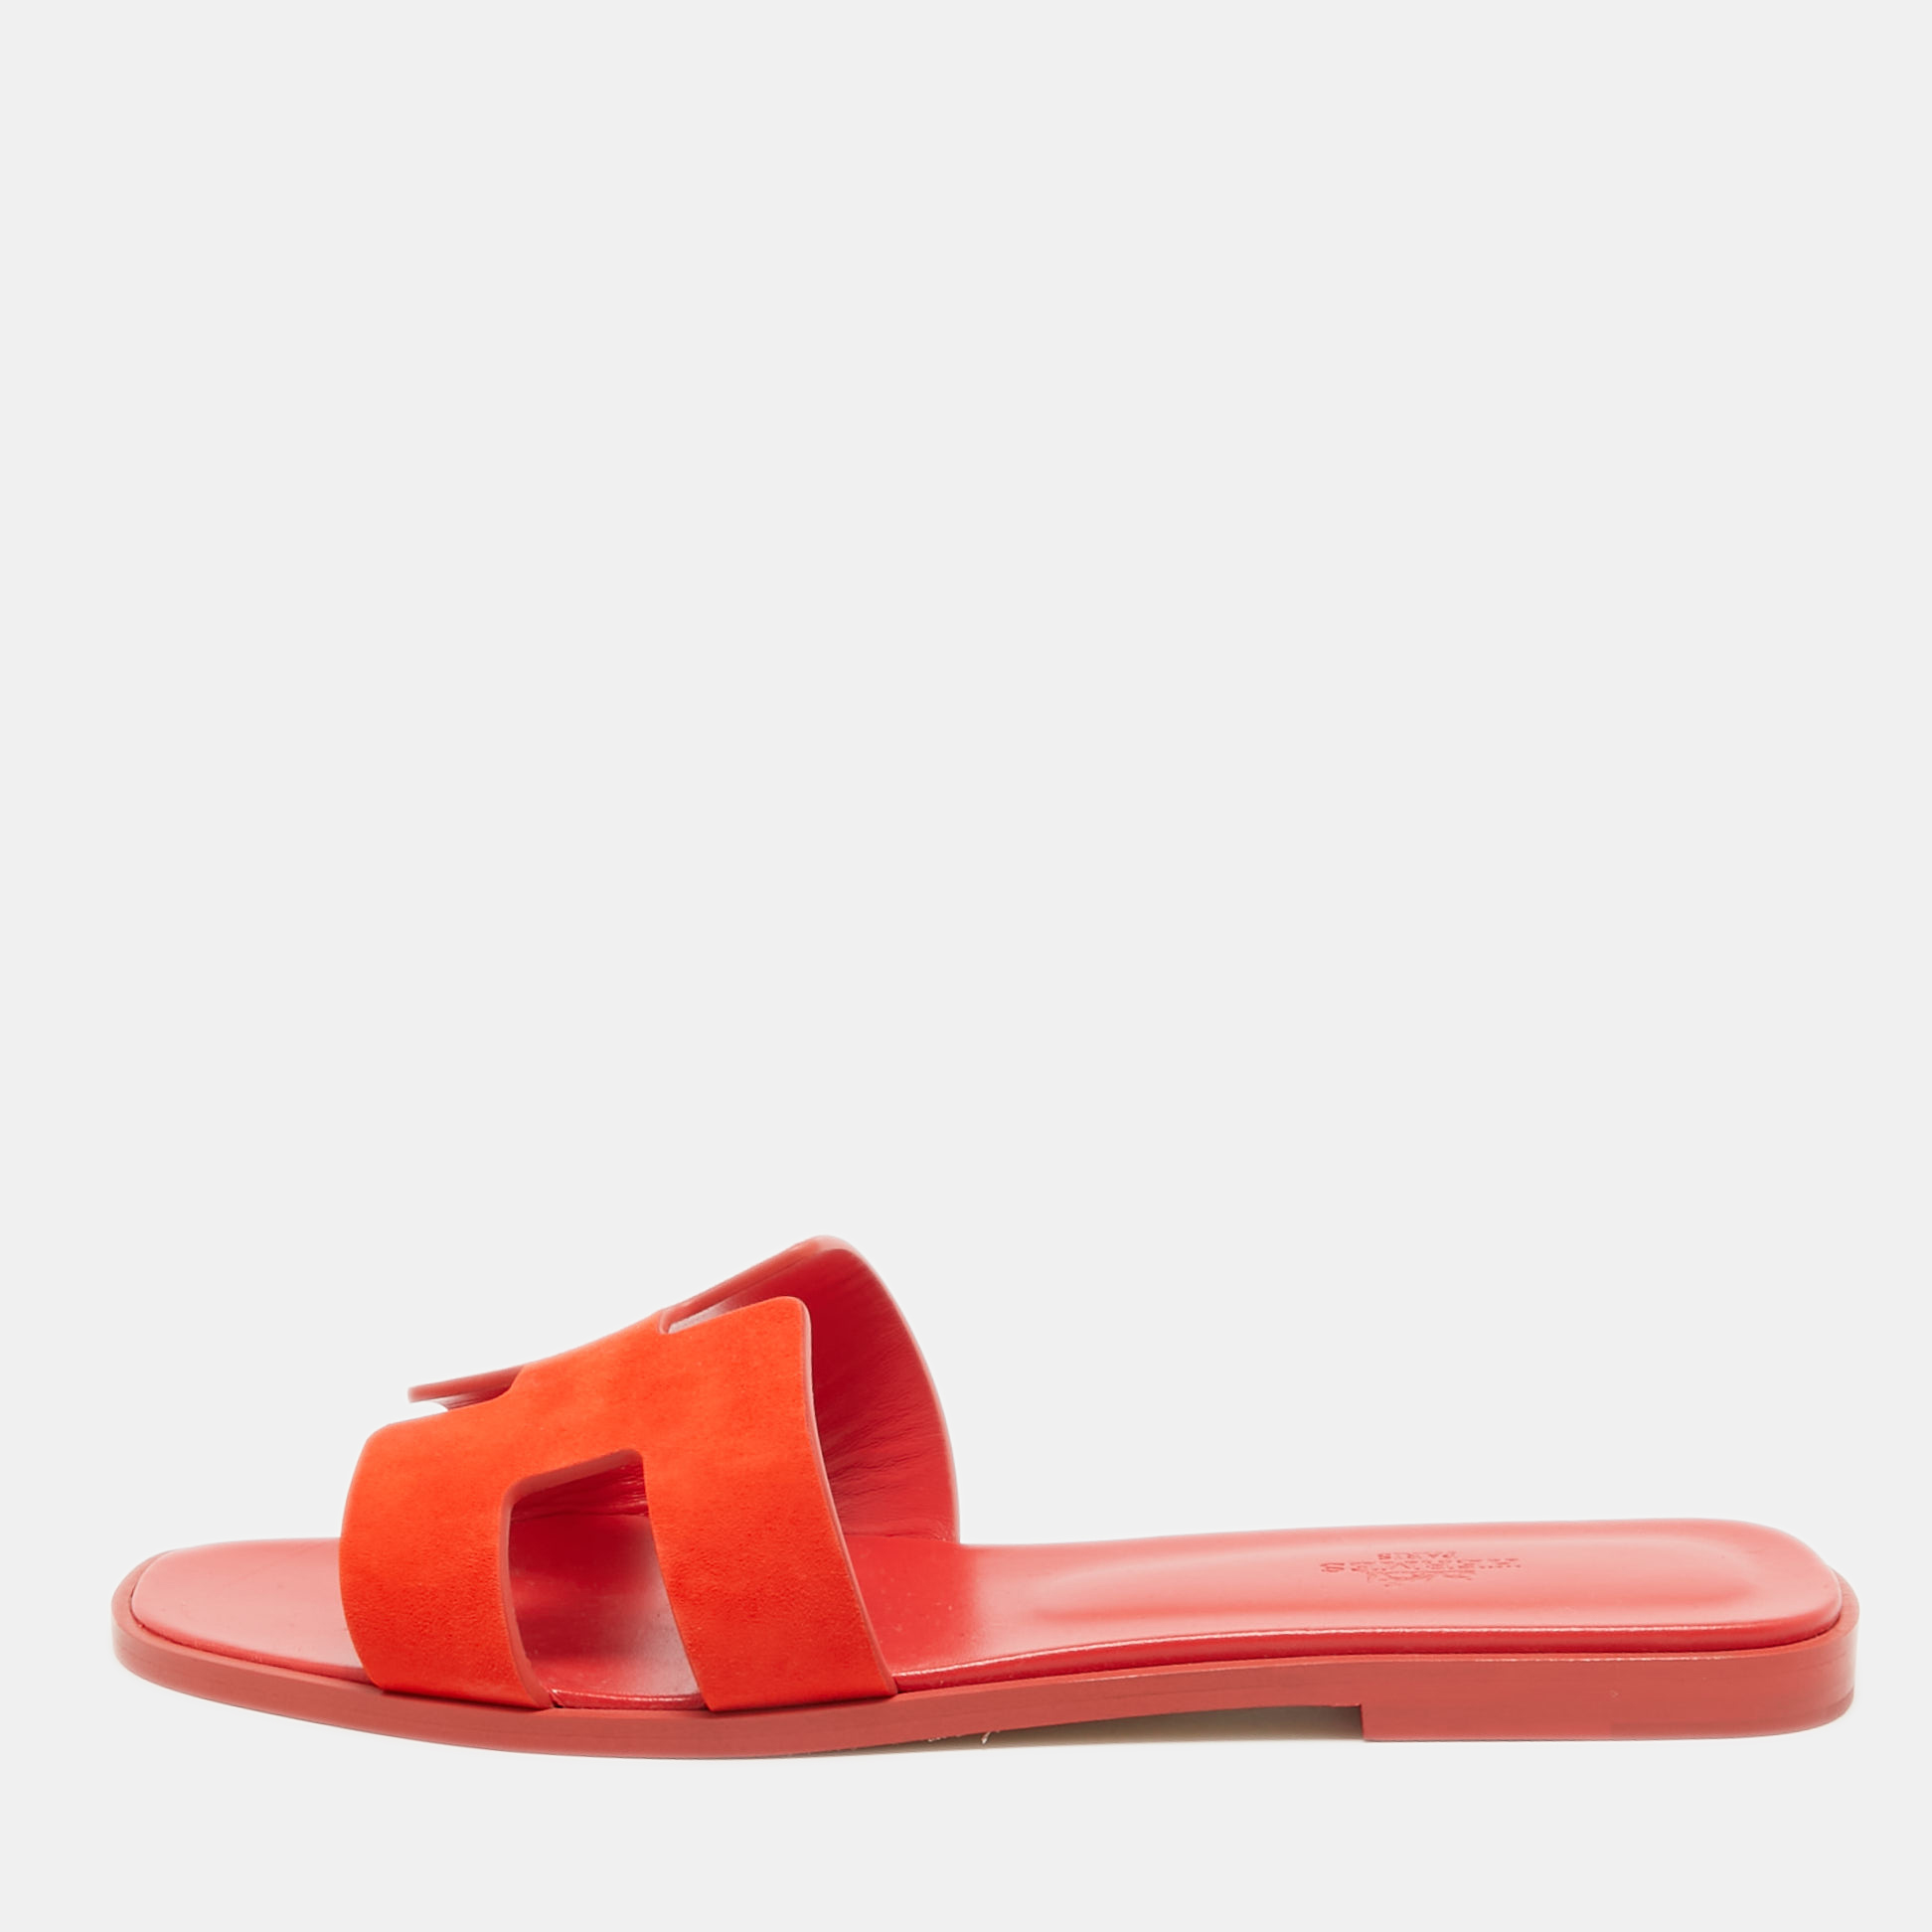 Hermes red suede oran flat slides size 41